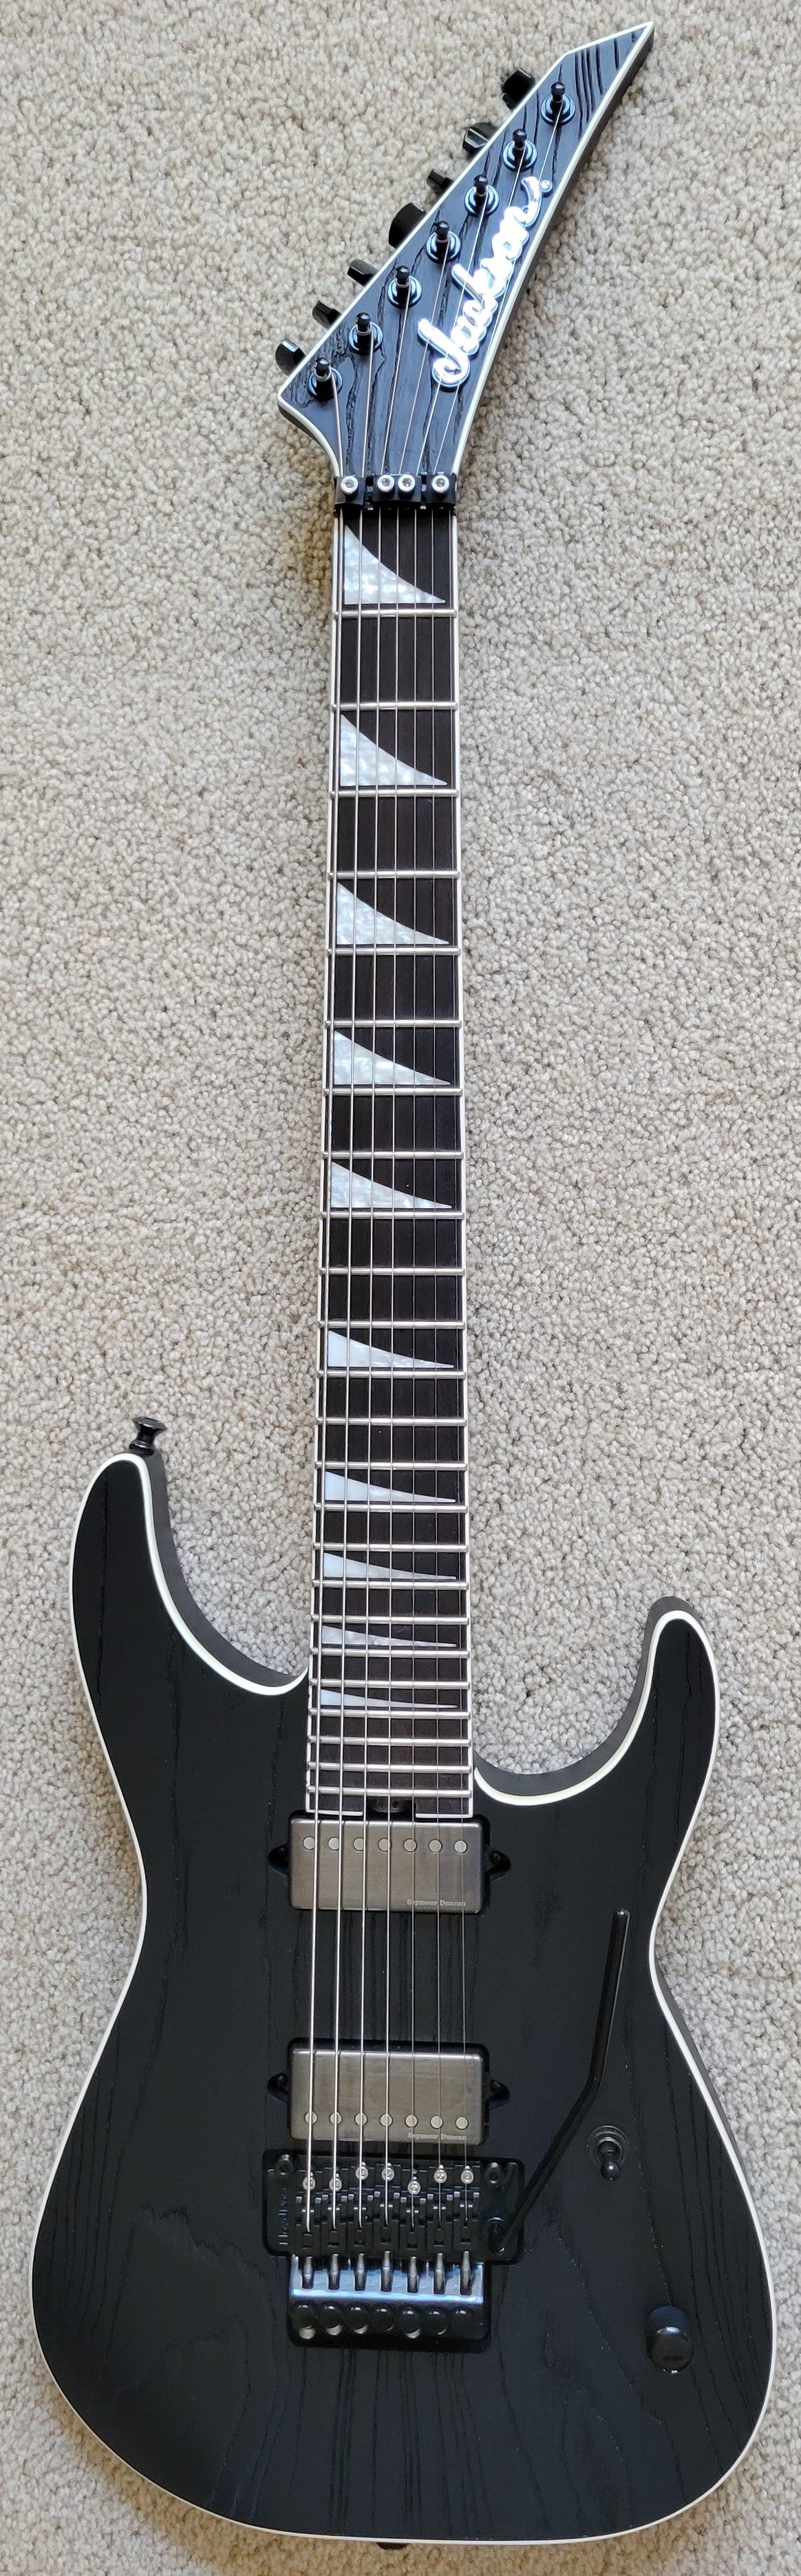 Jackson Pro Series Signature Jeff Loomis Soloist SL7 Electric Guitar, New Hard Shell Case